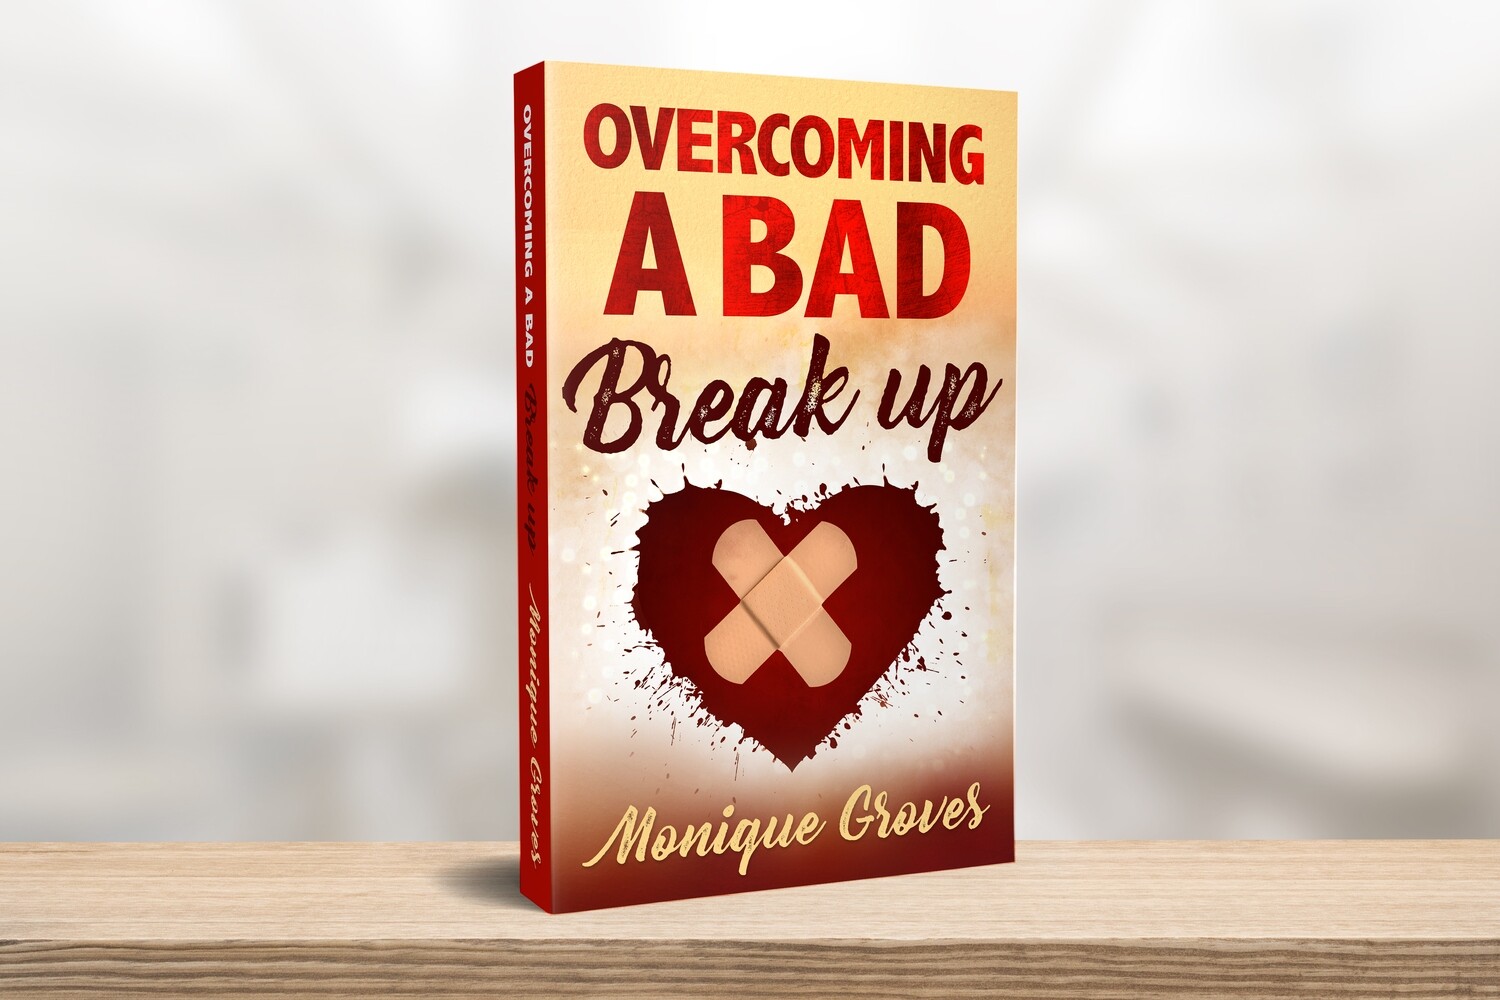 OVERCOMING A BAD BREAK UP